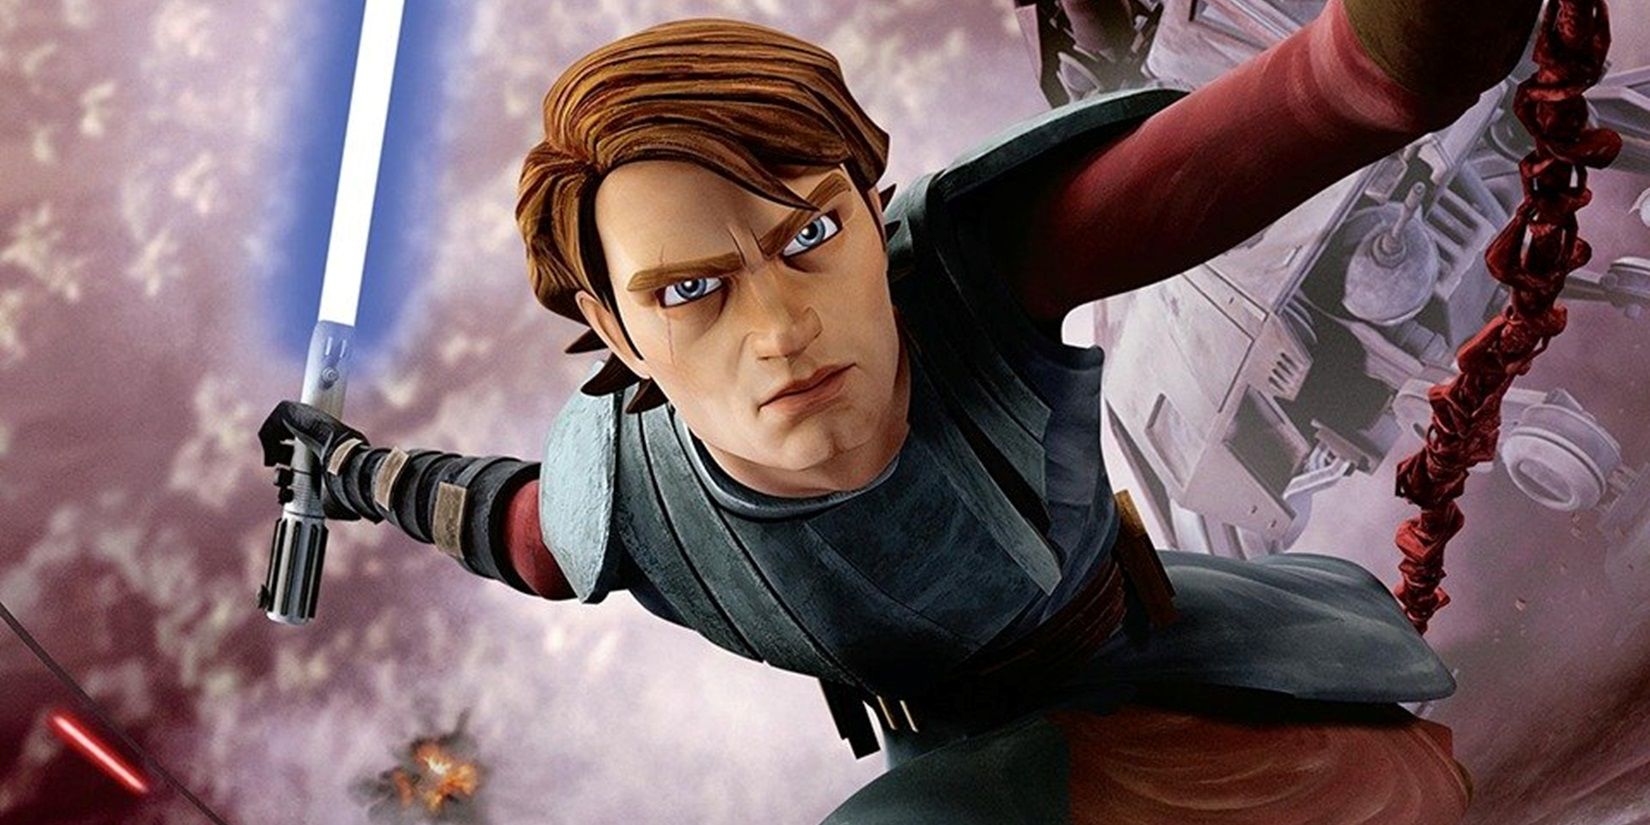 Anakin com seu sabre de luz no filme Clone Wars